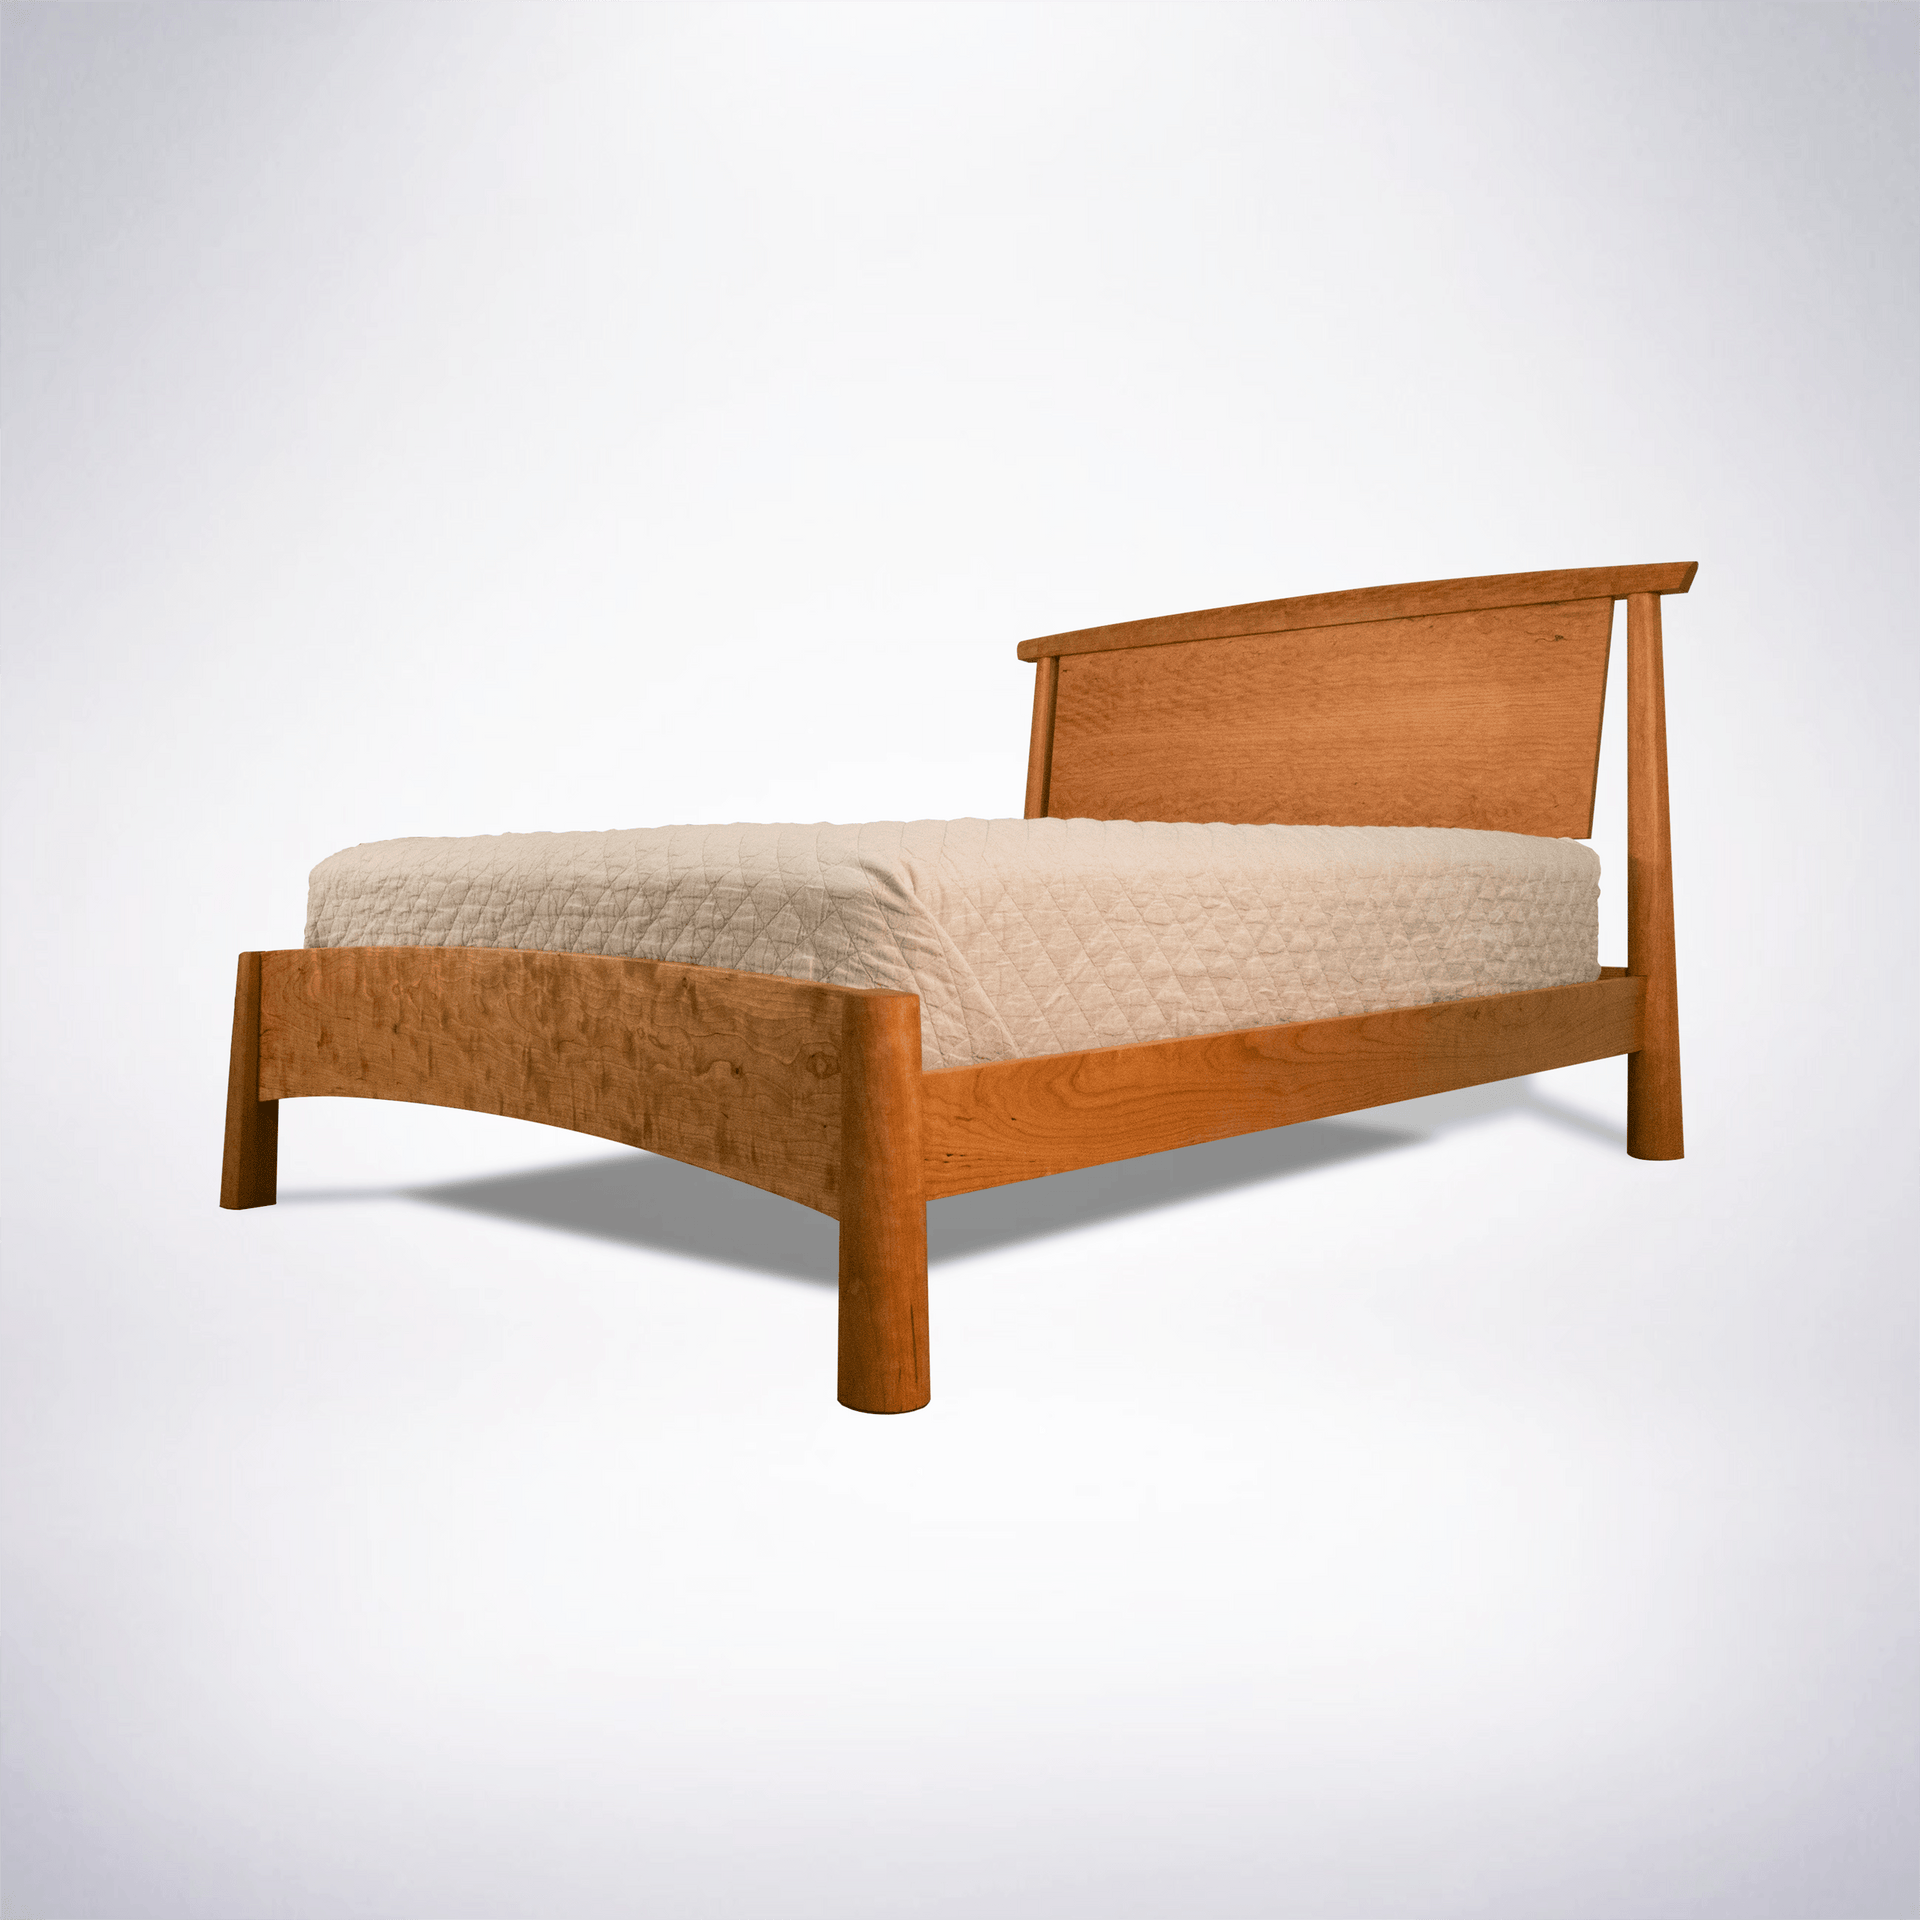 Side view of a modern platform bed, an organic furniture